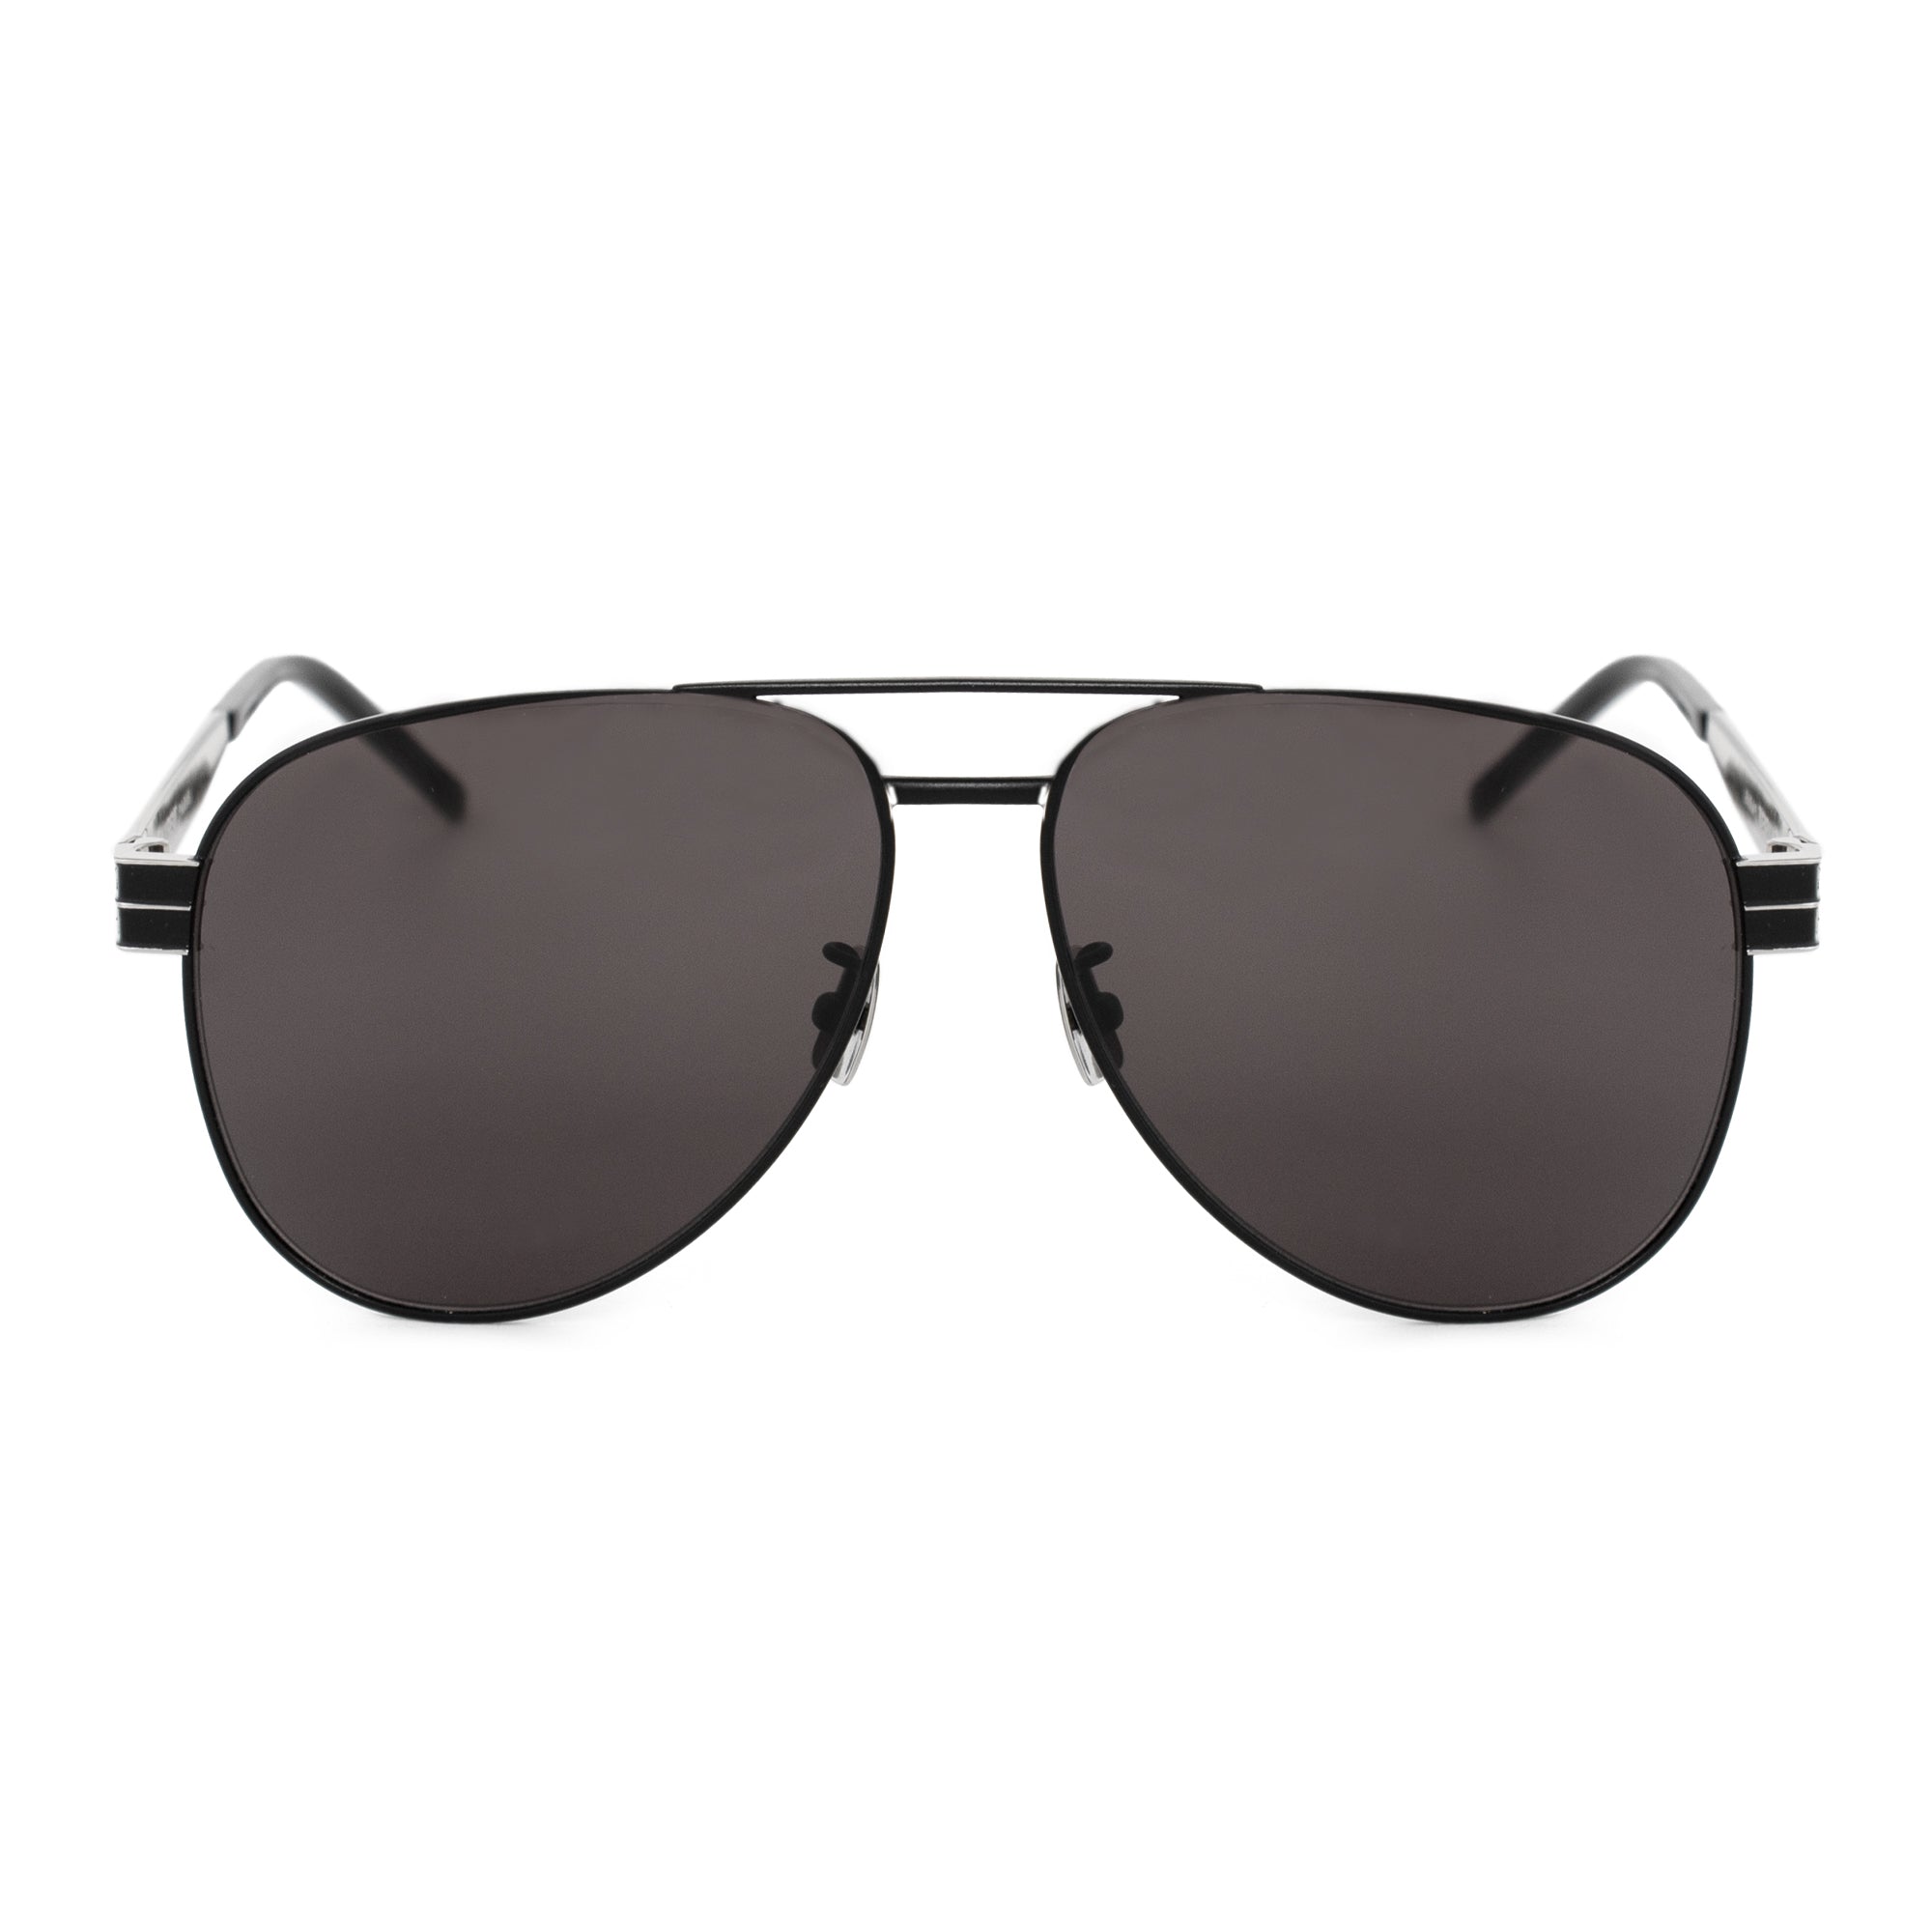 Saint Laurent Aviator Sunglasses SLM53 001 60